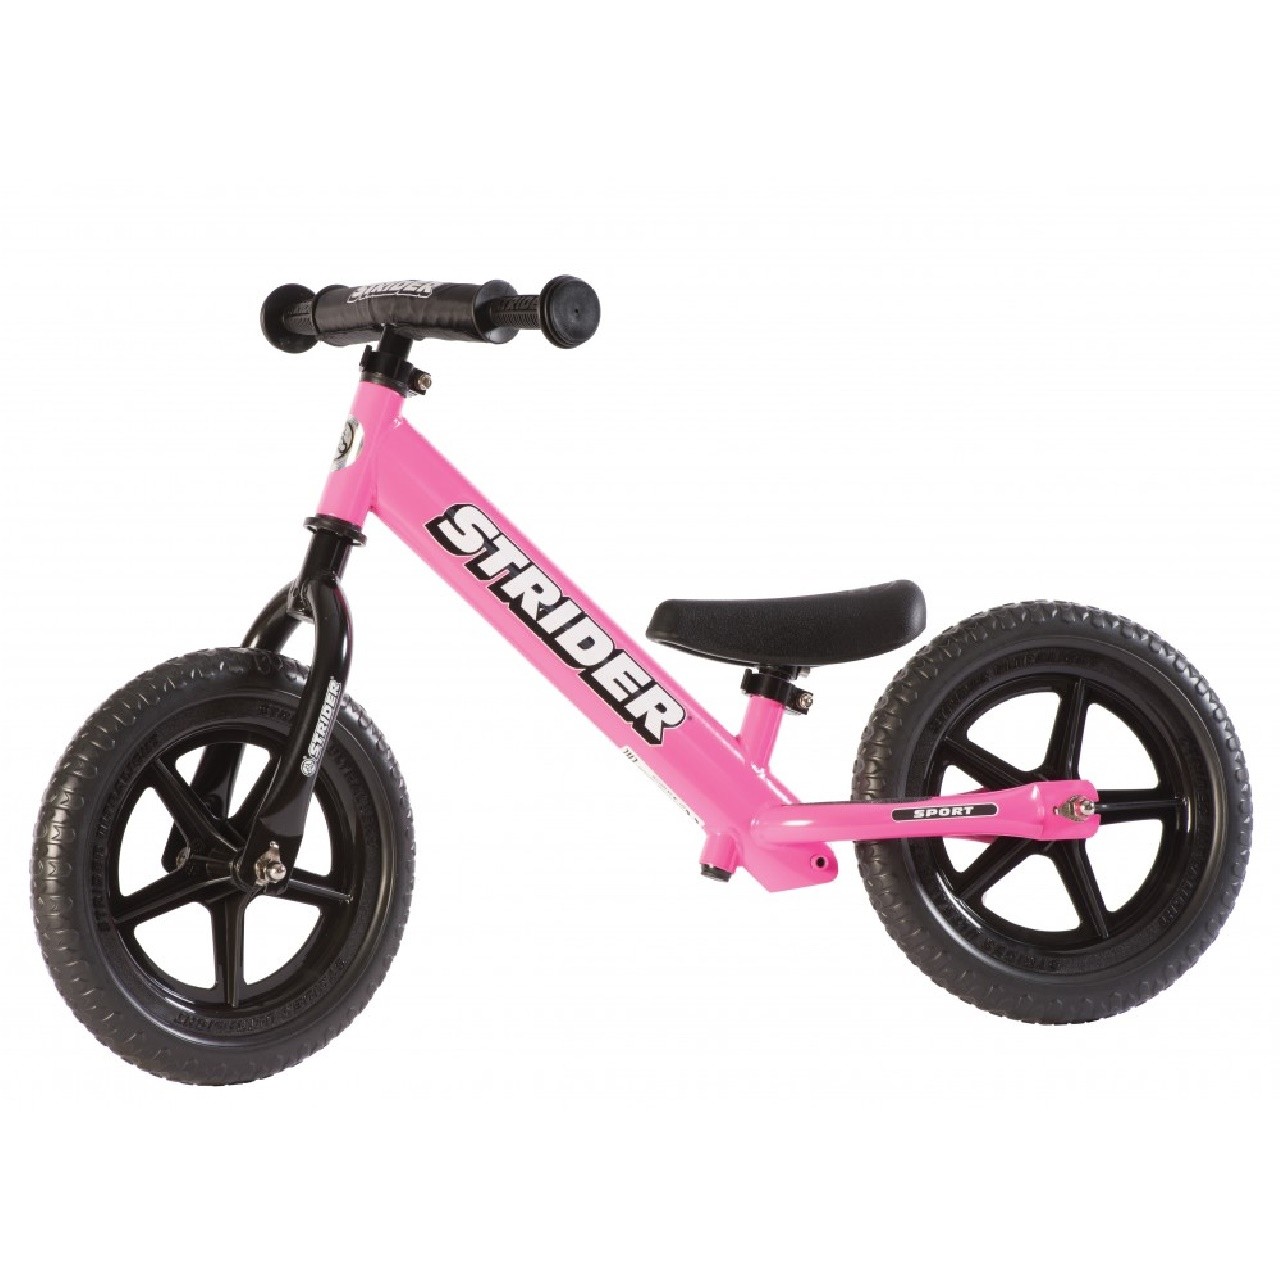 STRIDER 12 Sport Kids Balance Bike No-Pedal Learn To Ride Pre Bike Pink